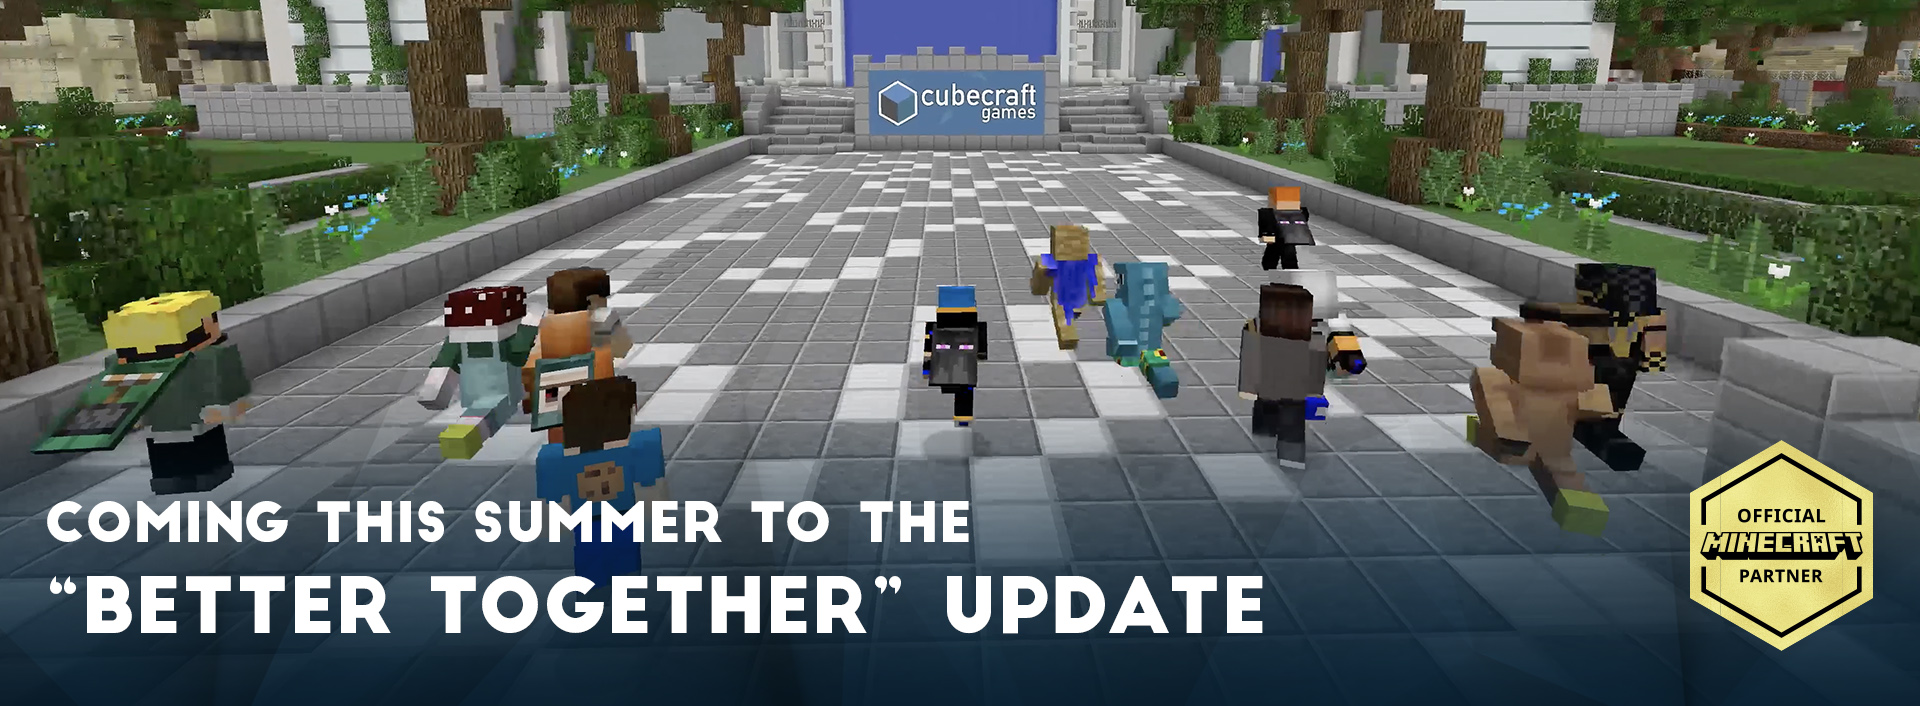 Better Together Update Cubecraft Games